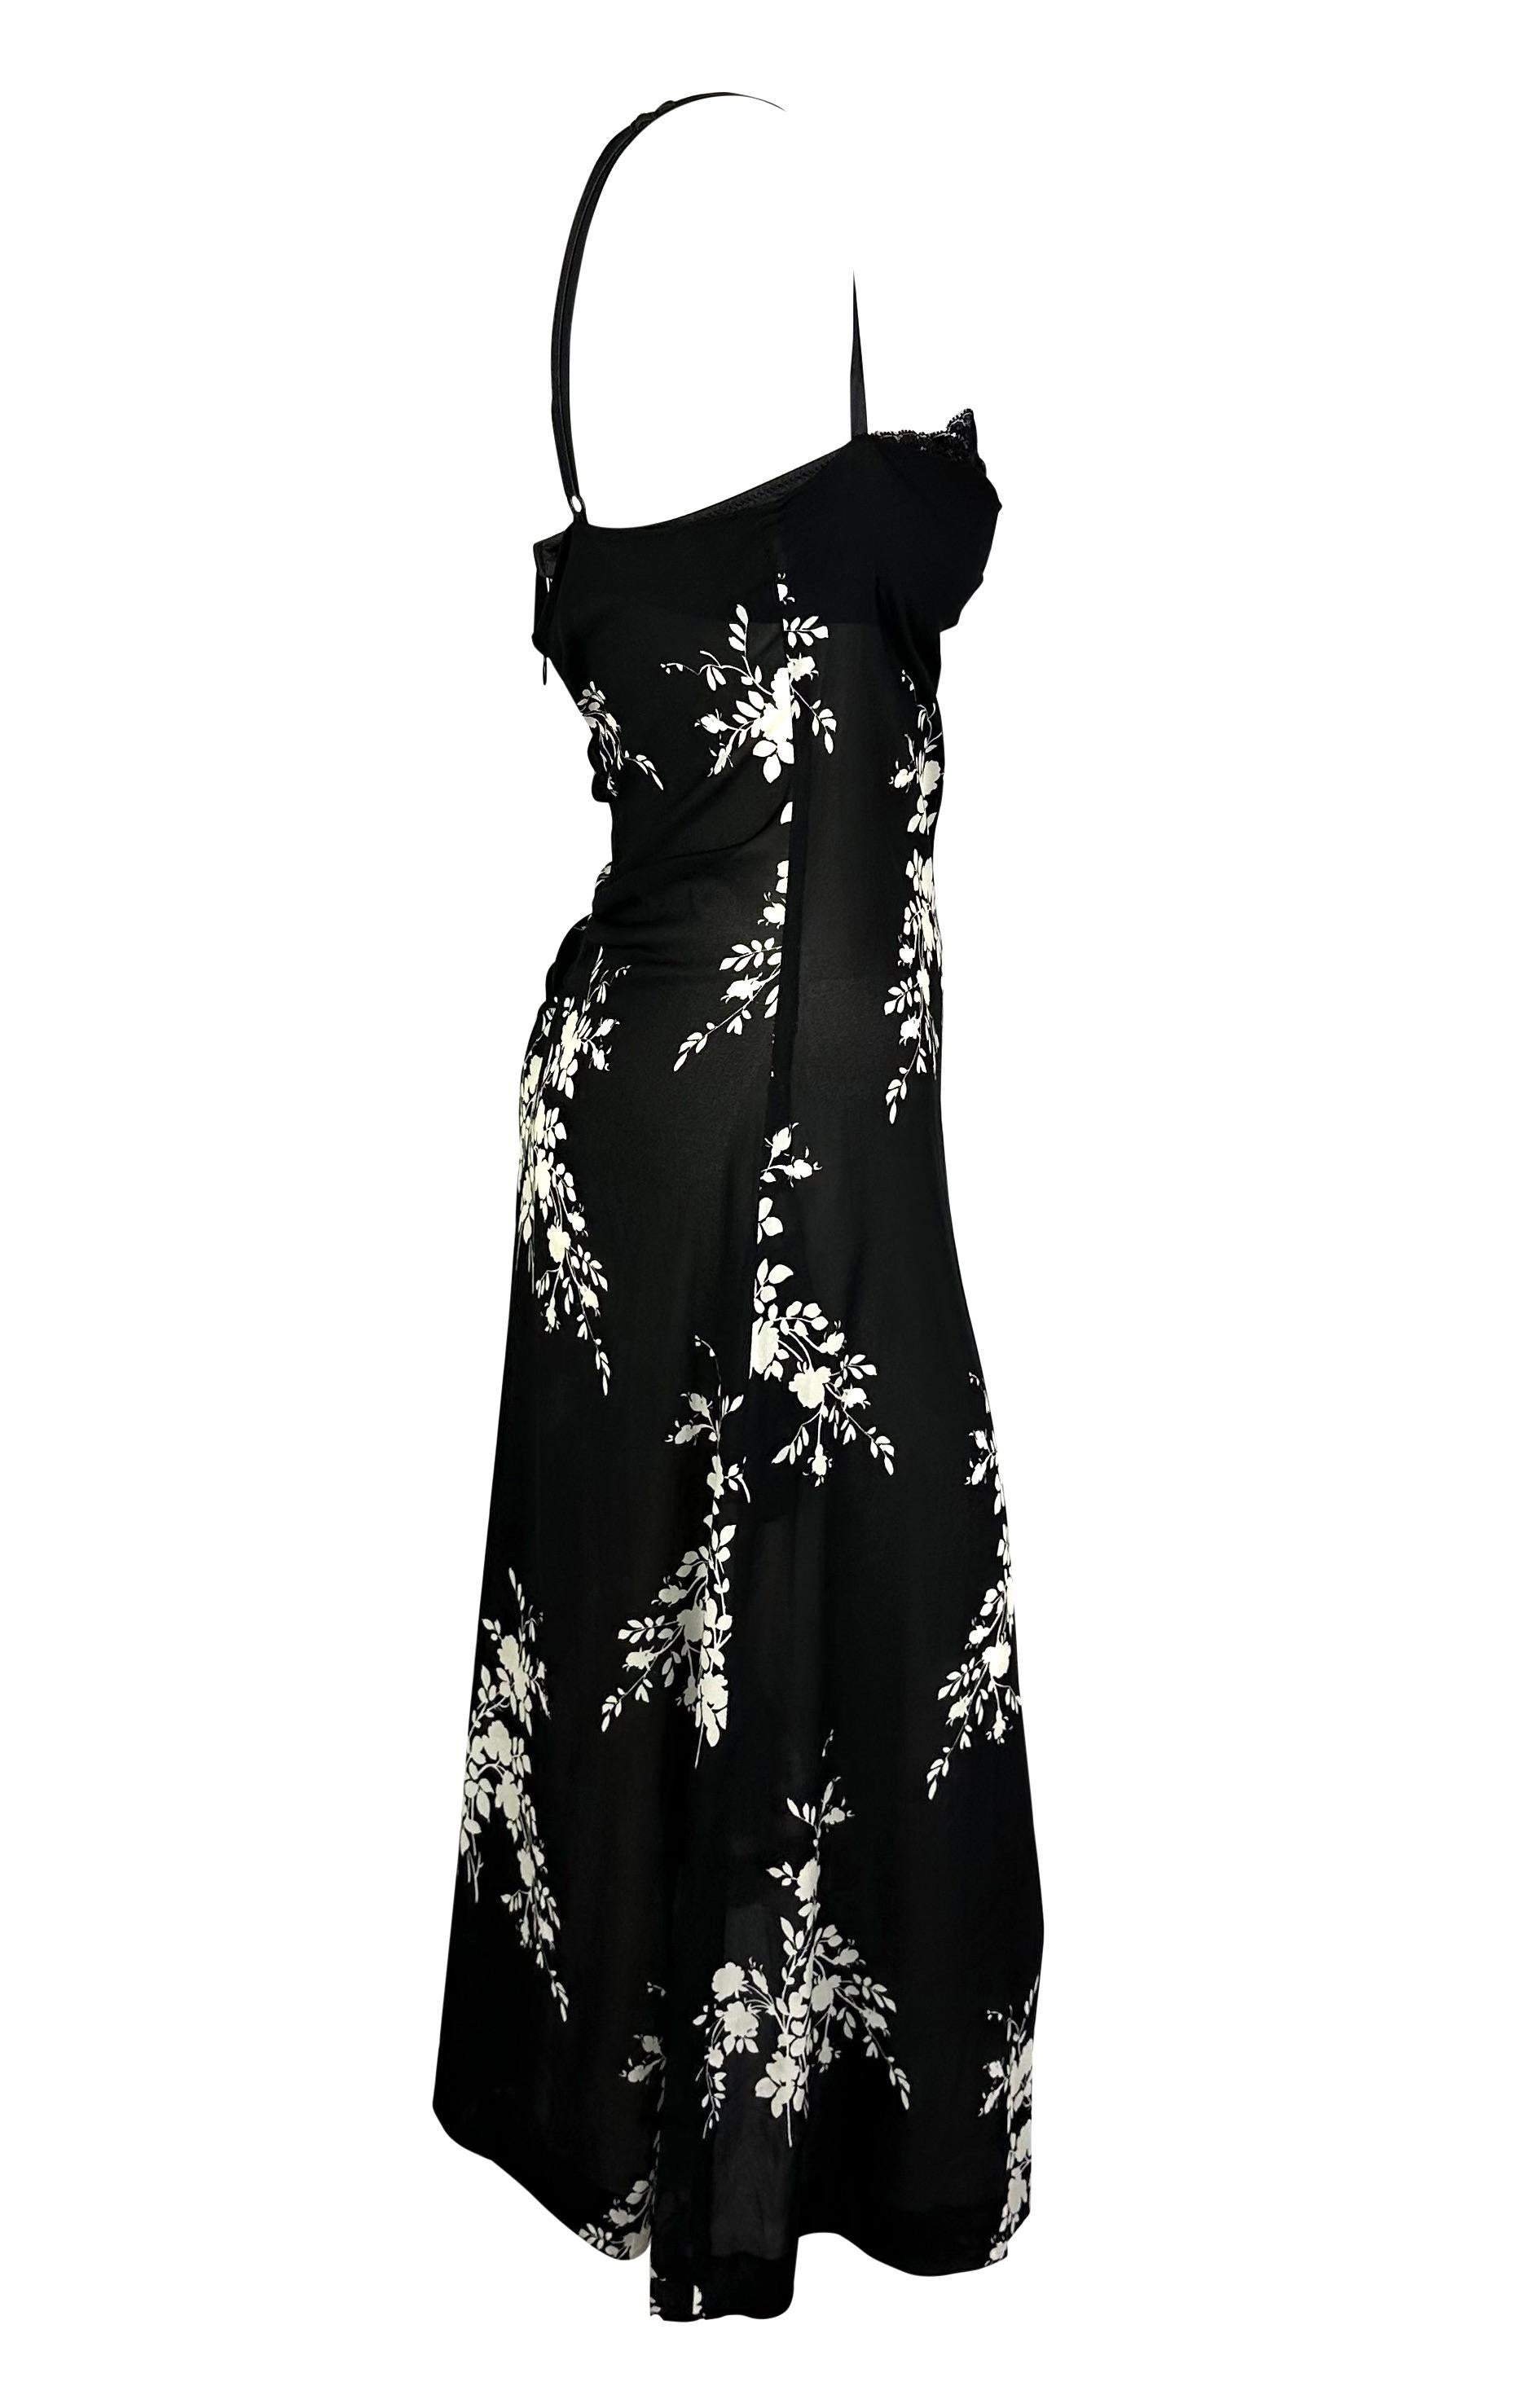 S/S 2002 Dolce & Gabbana Runway Sheer Black Stretch Silk Floral Bustier Dress 4